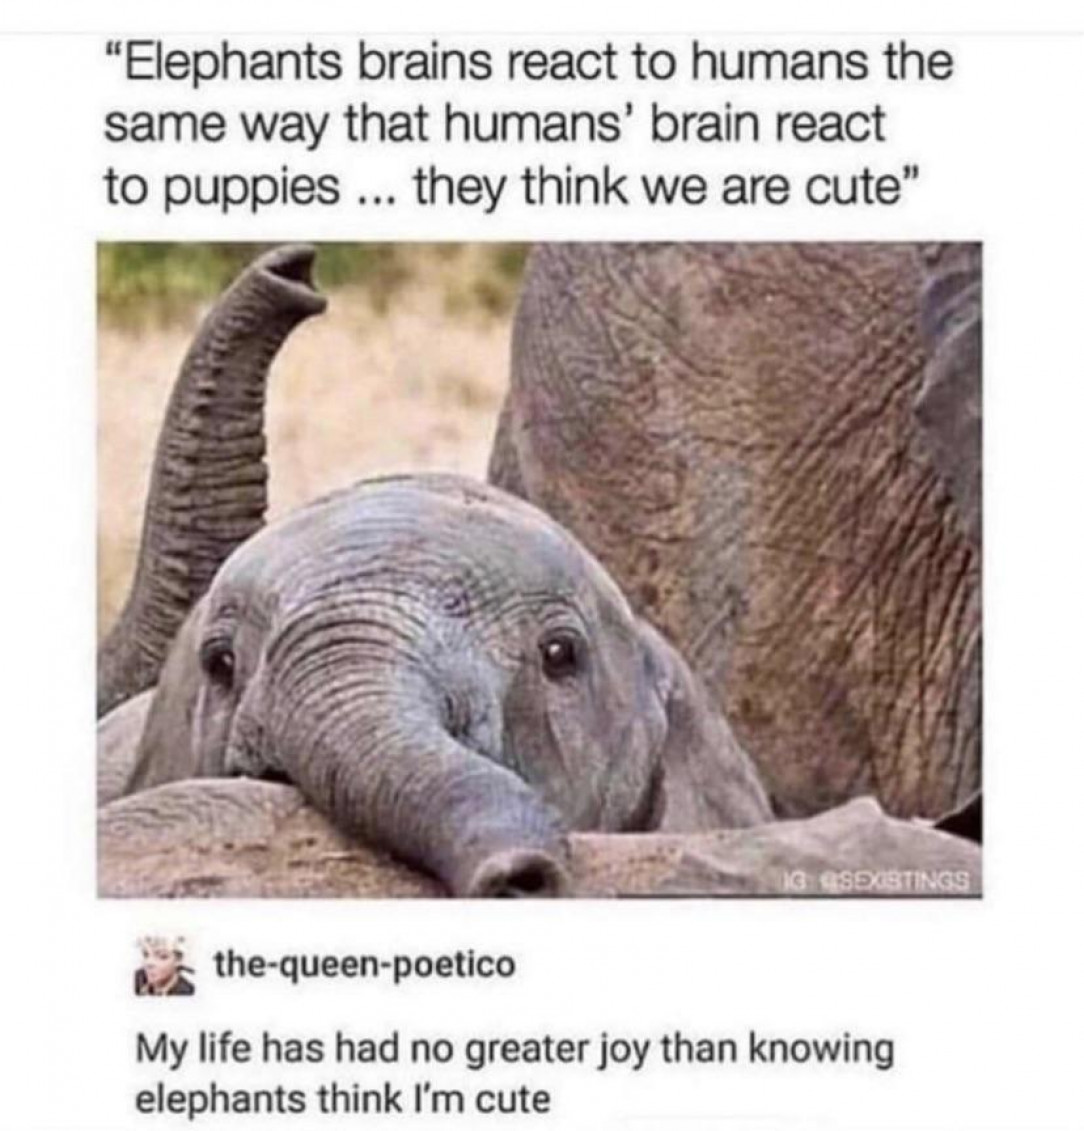 Elephants think the human is cute